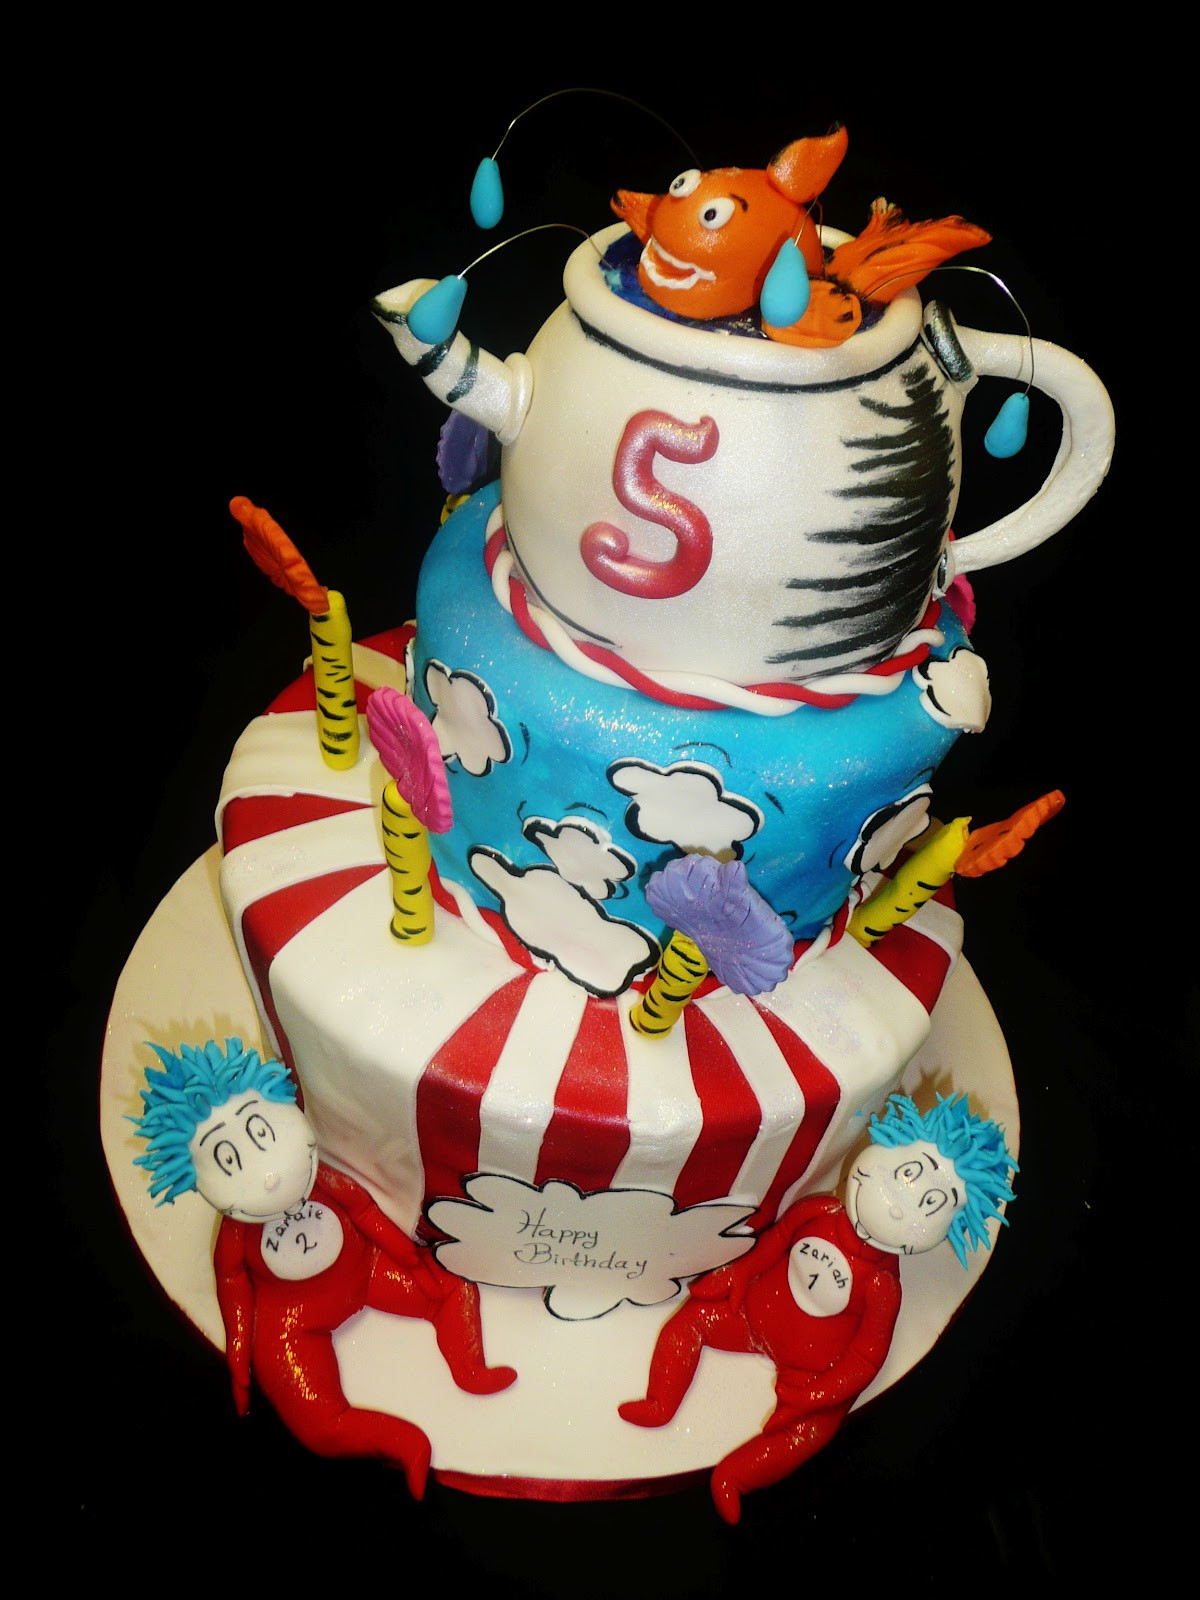 Dr Seuss Birthday Cake
 Baking with Roxana s Cakes Dr Seuss Themed Birthday Cake